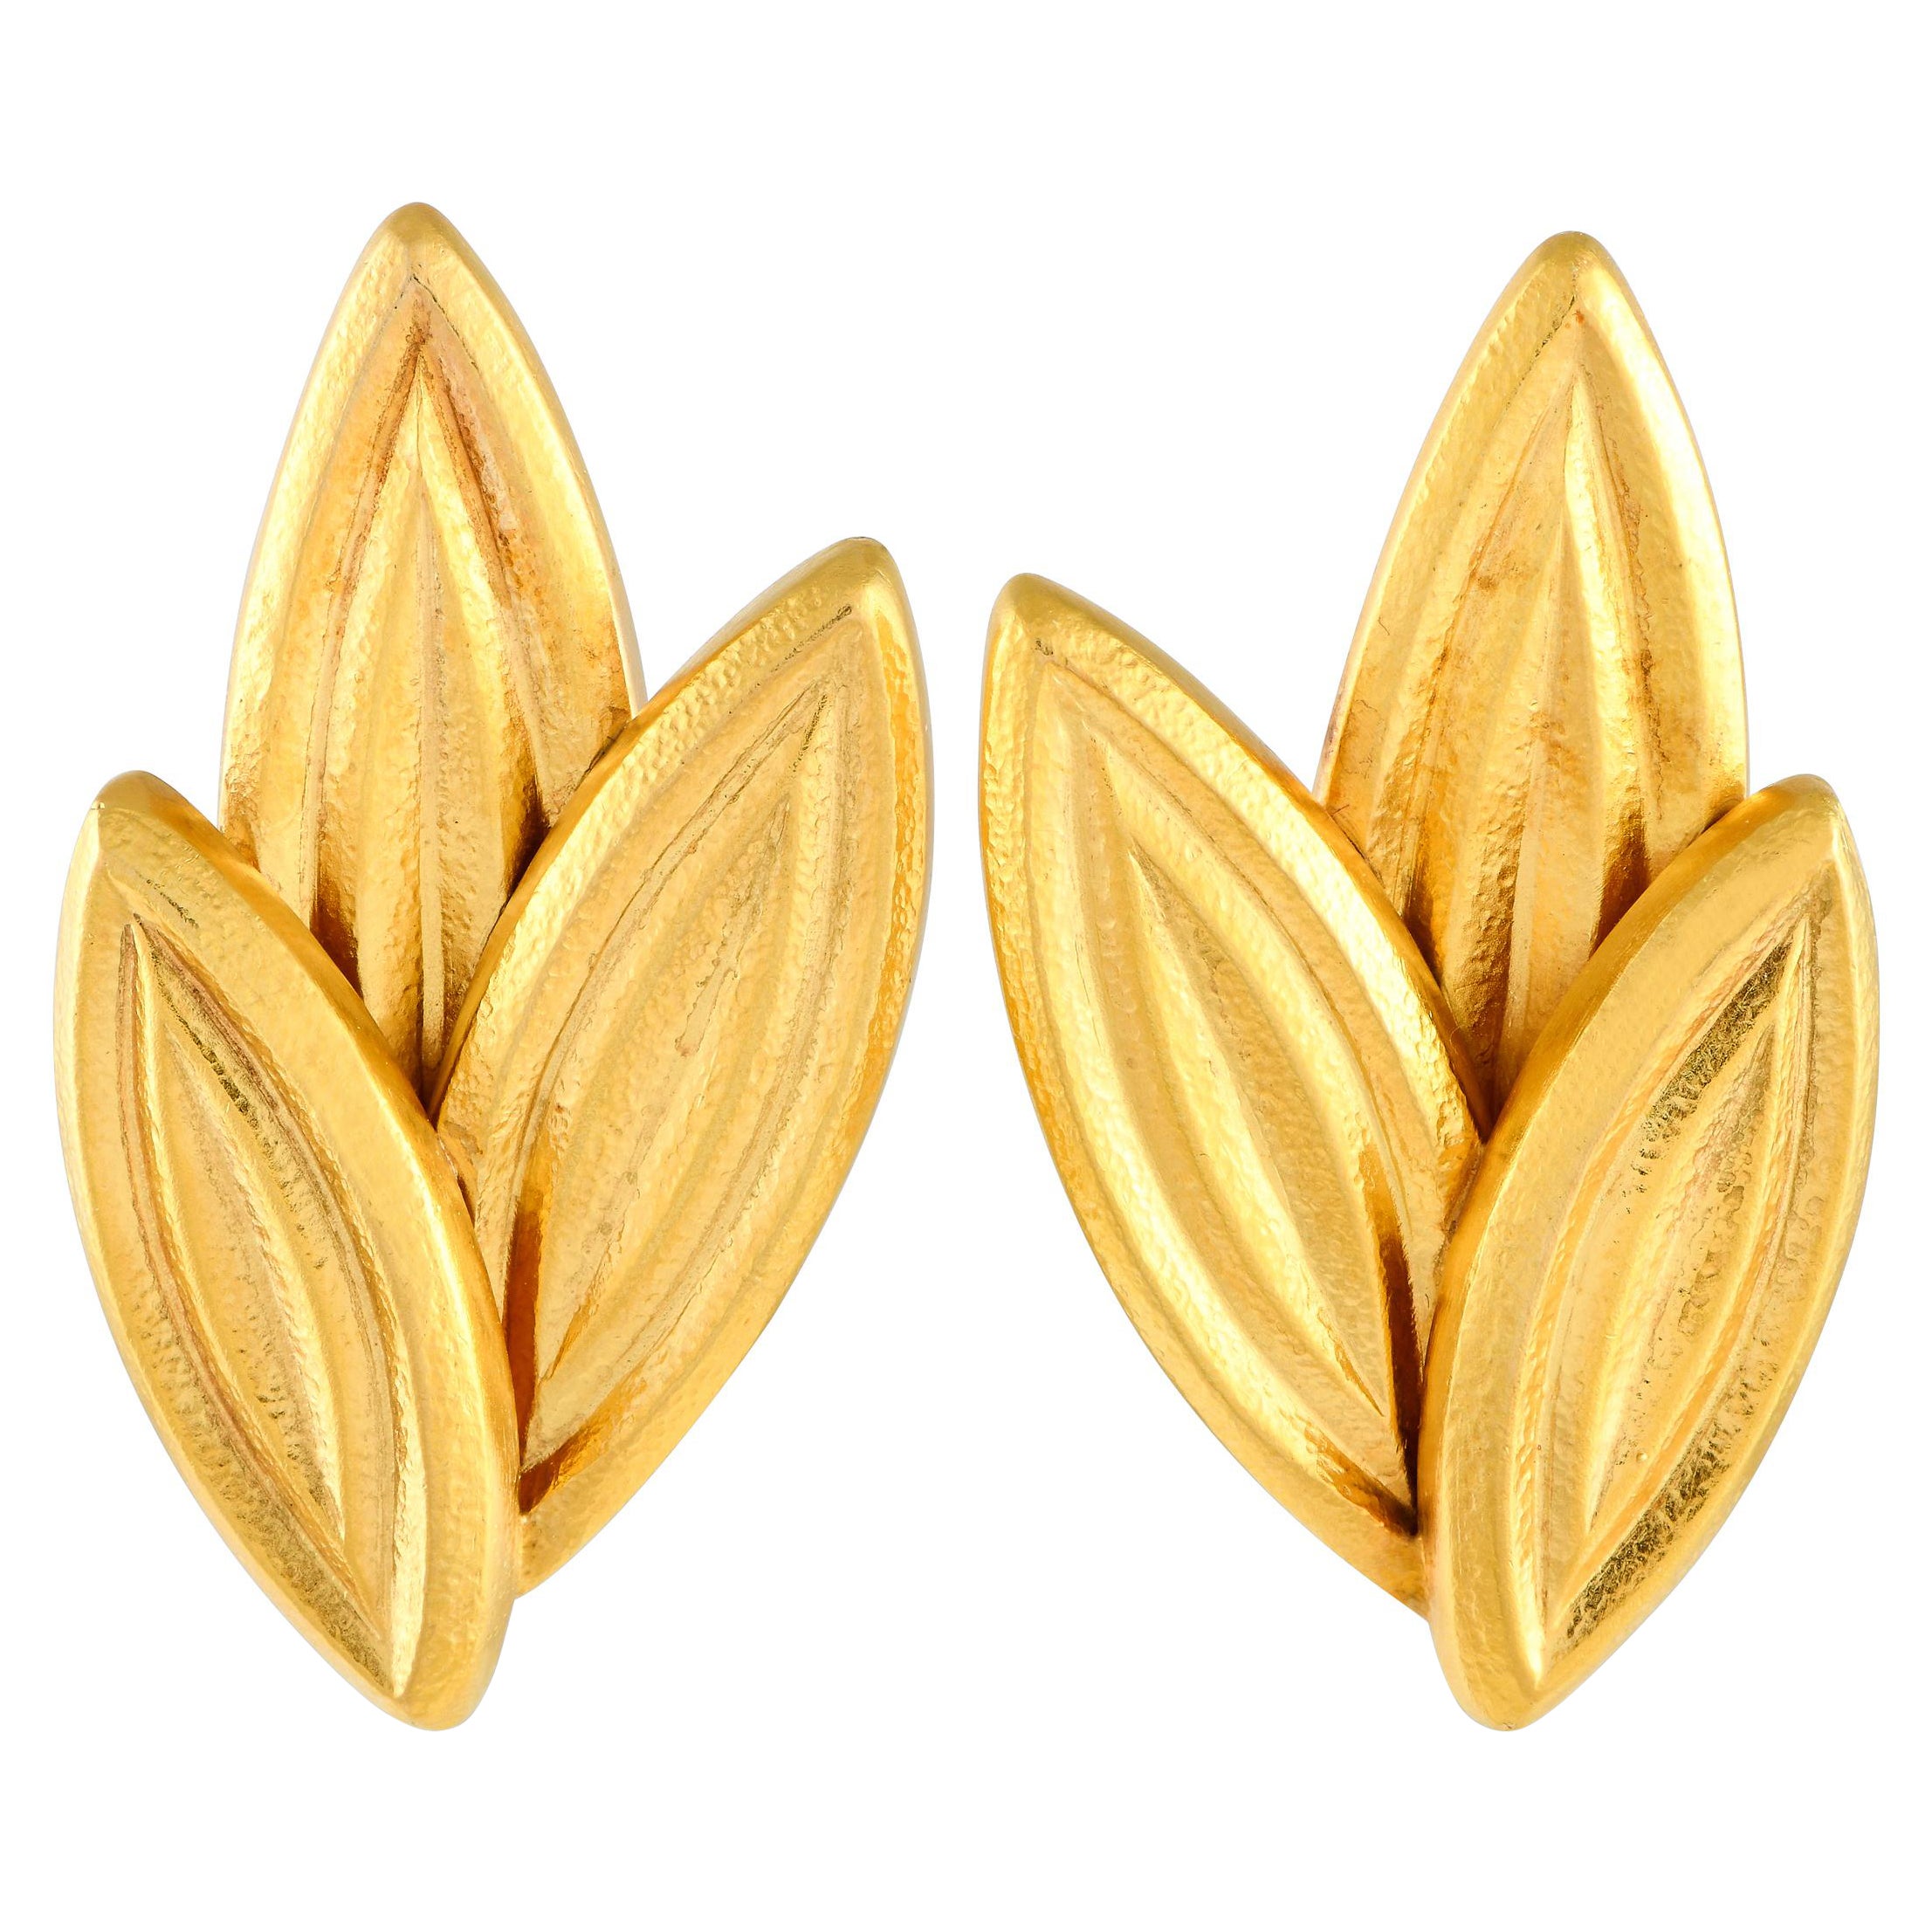 Ilias Lalaounis 18K Yellow Gold Leaf Earrings